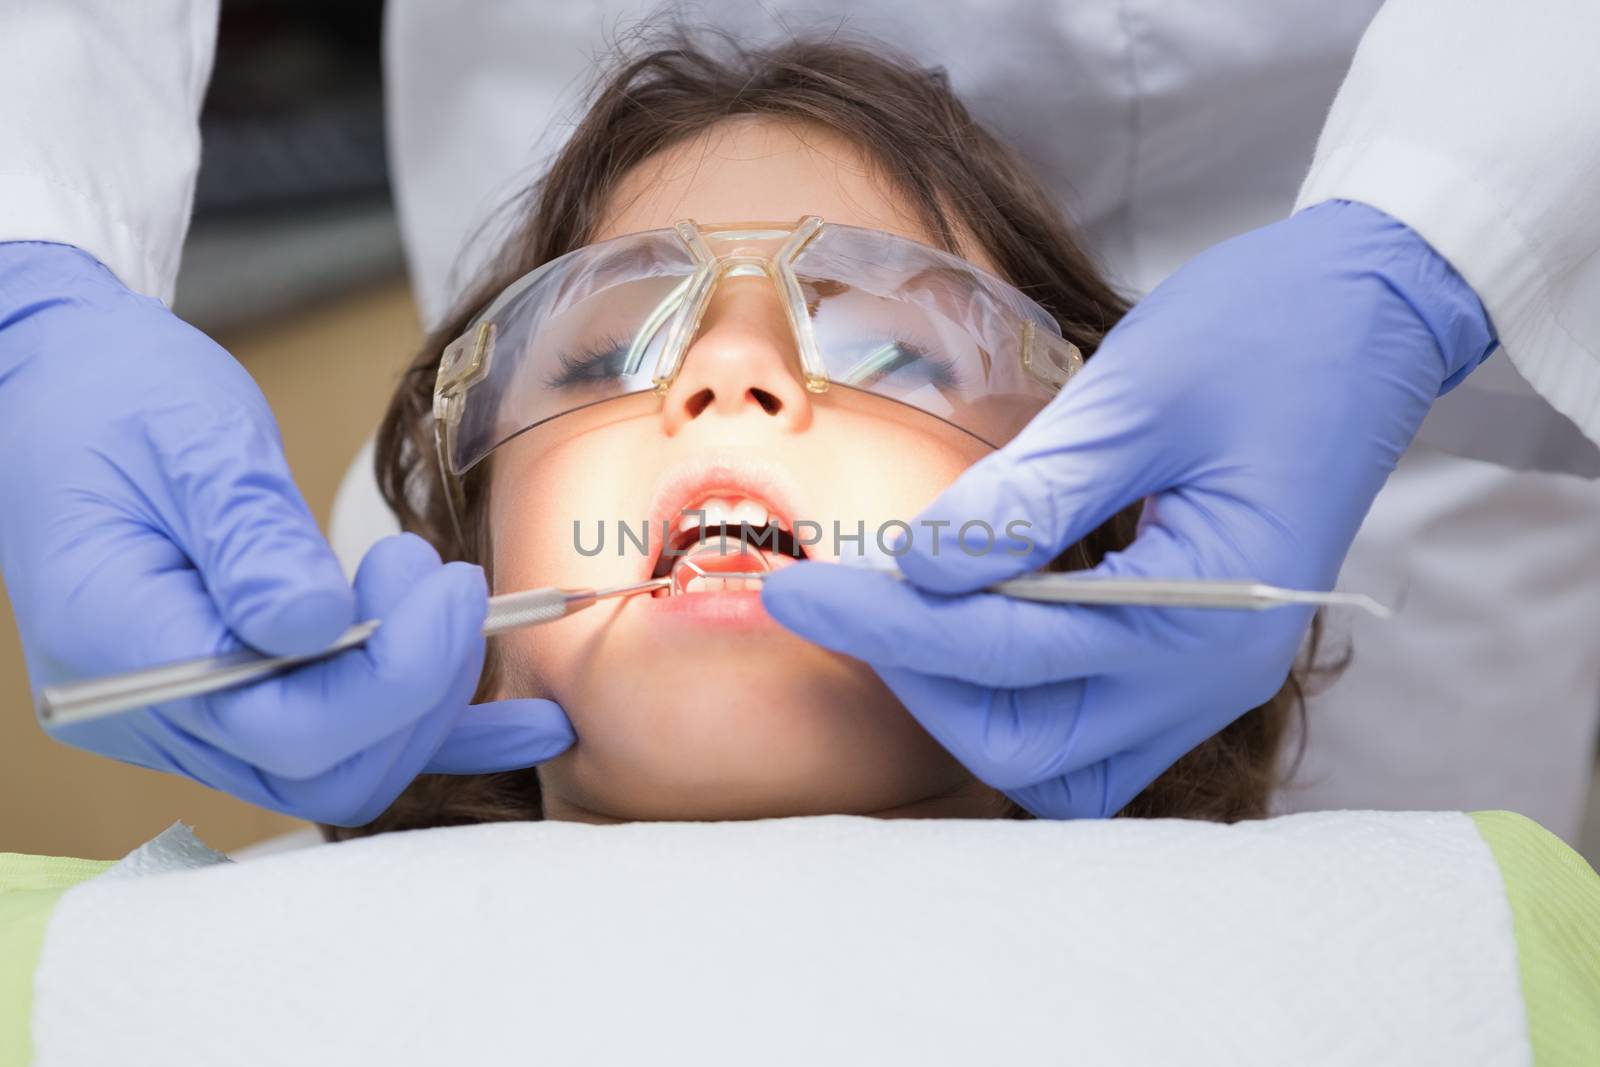 Pediatric dentist examining a little boys teeth in the dentists chair at the dental clinic